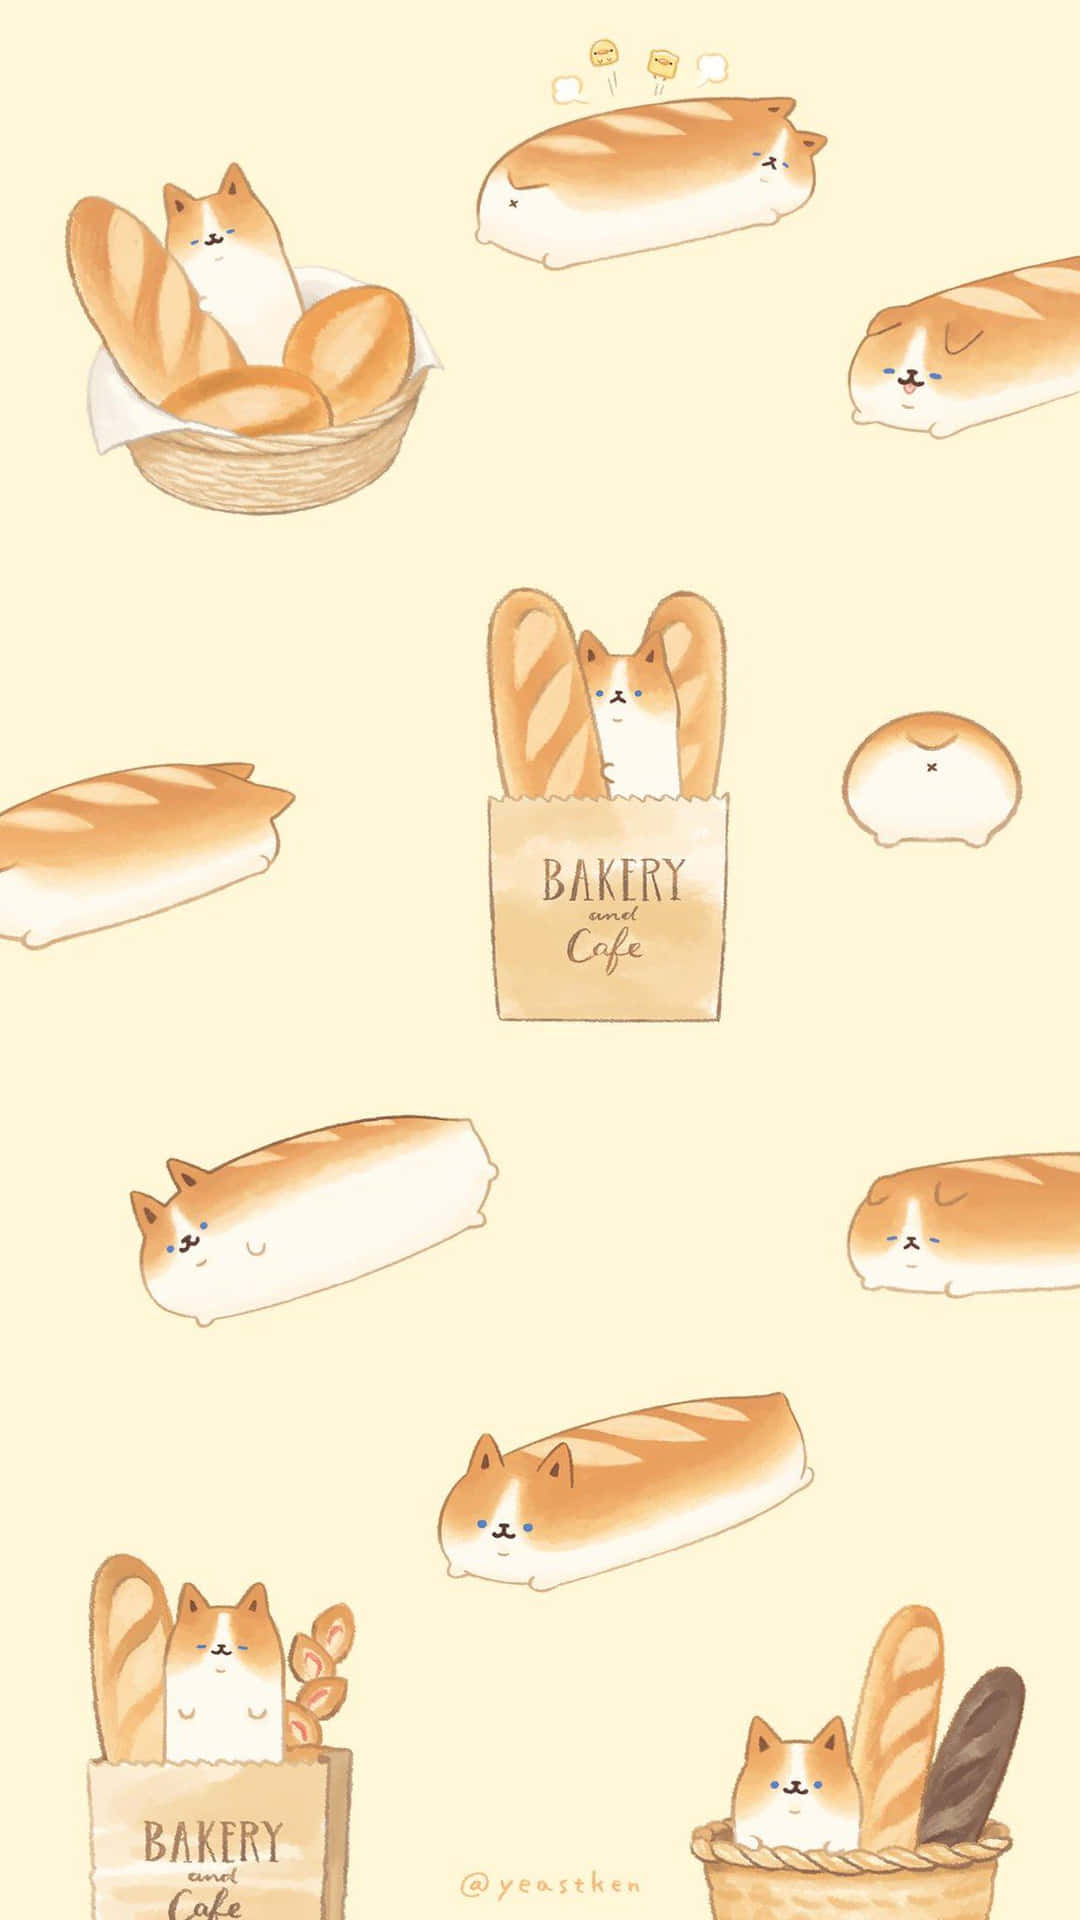 Brødbaggrundsbillede